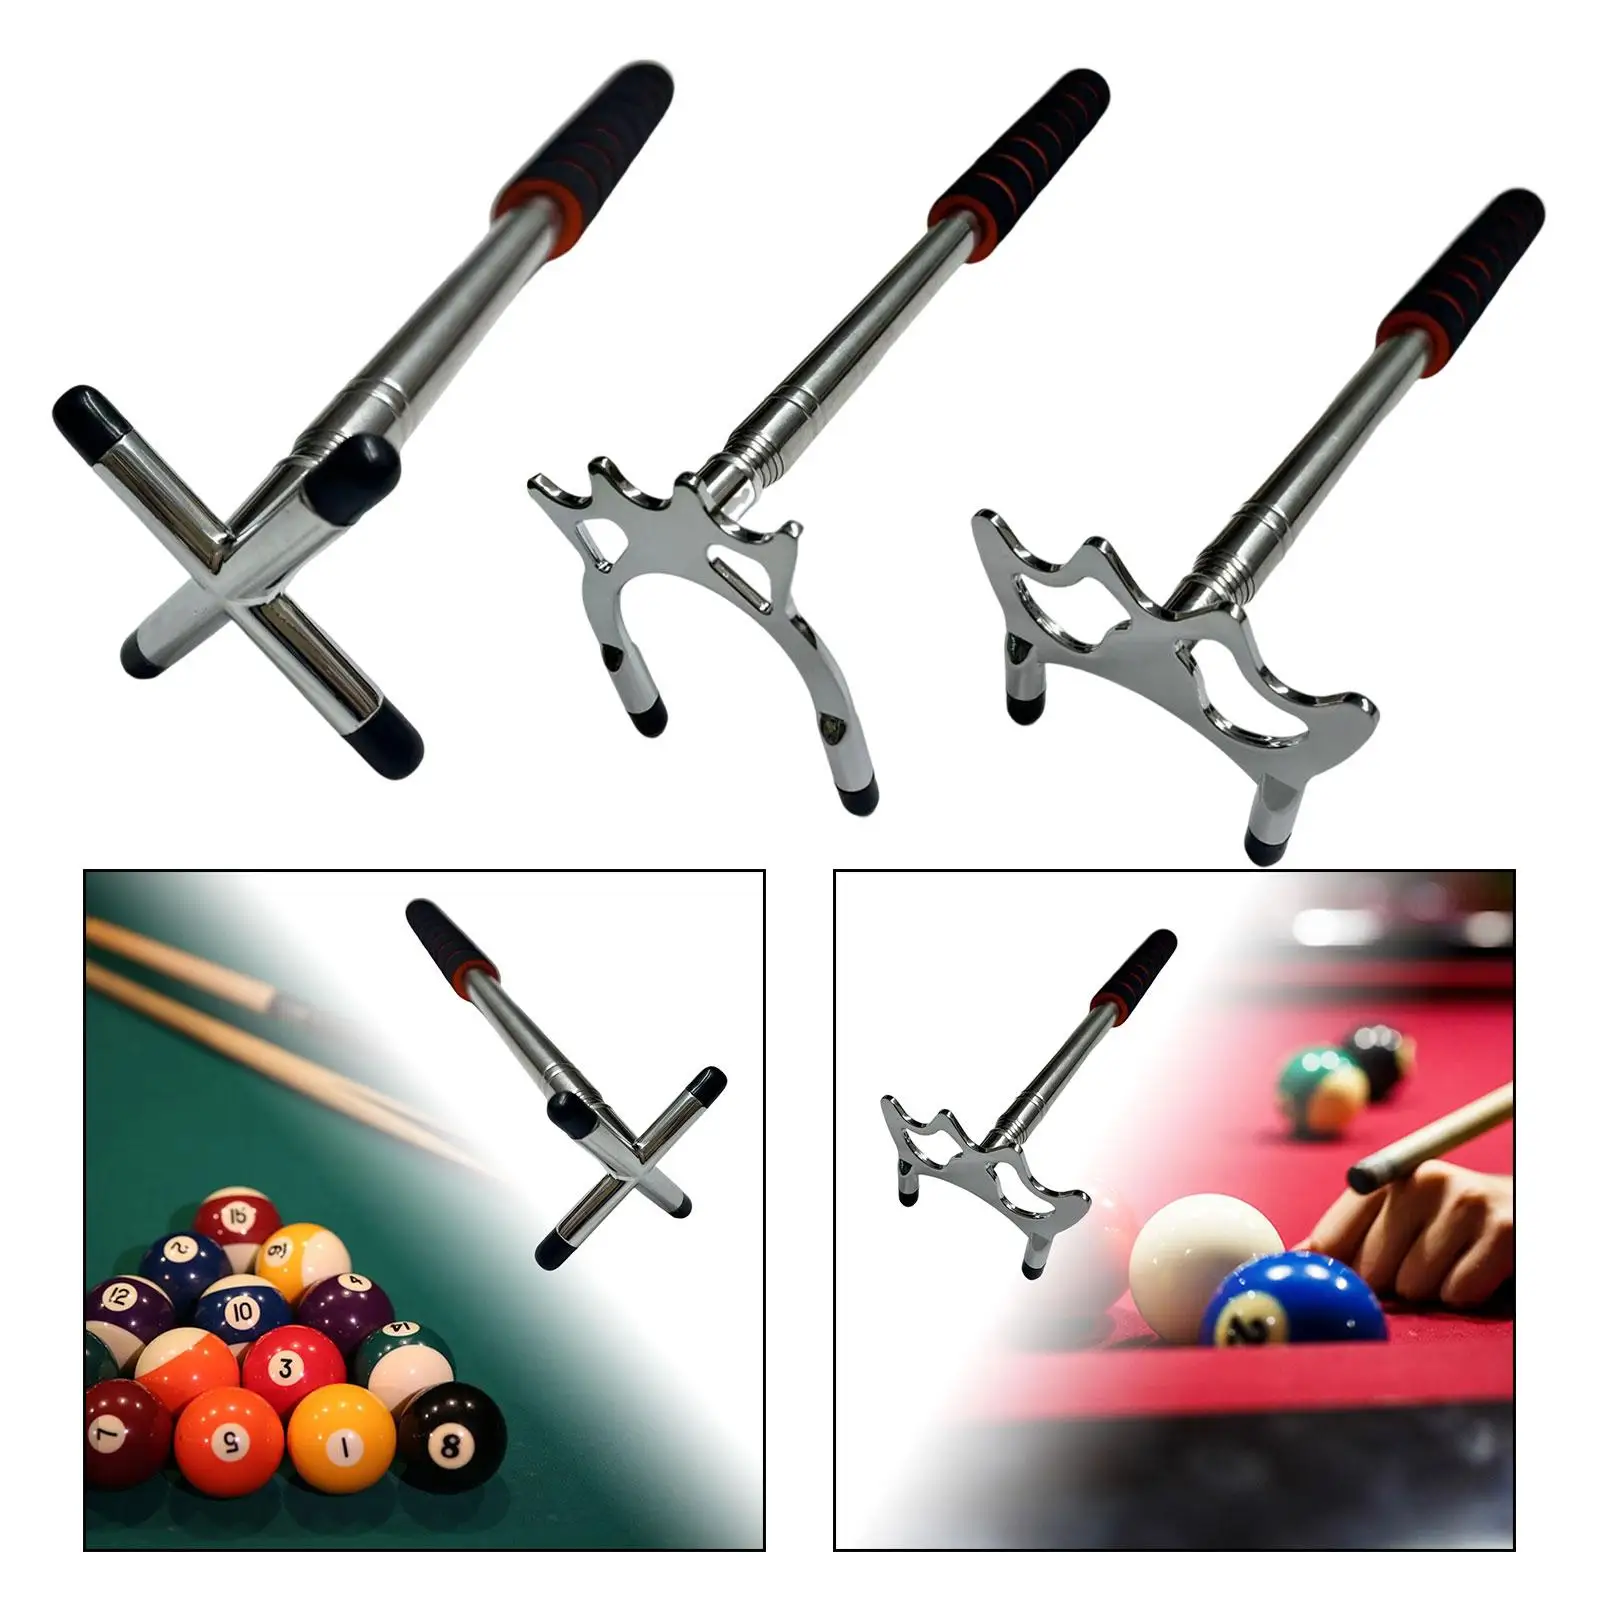 Portable Billiards Pool Cue Bridge with Bridge Head Metal for Indoor Game Accessory